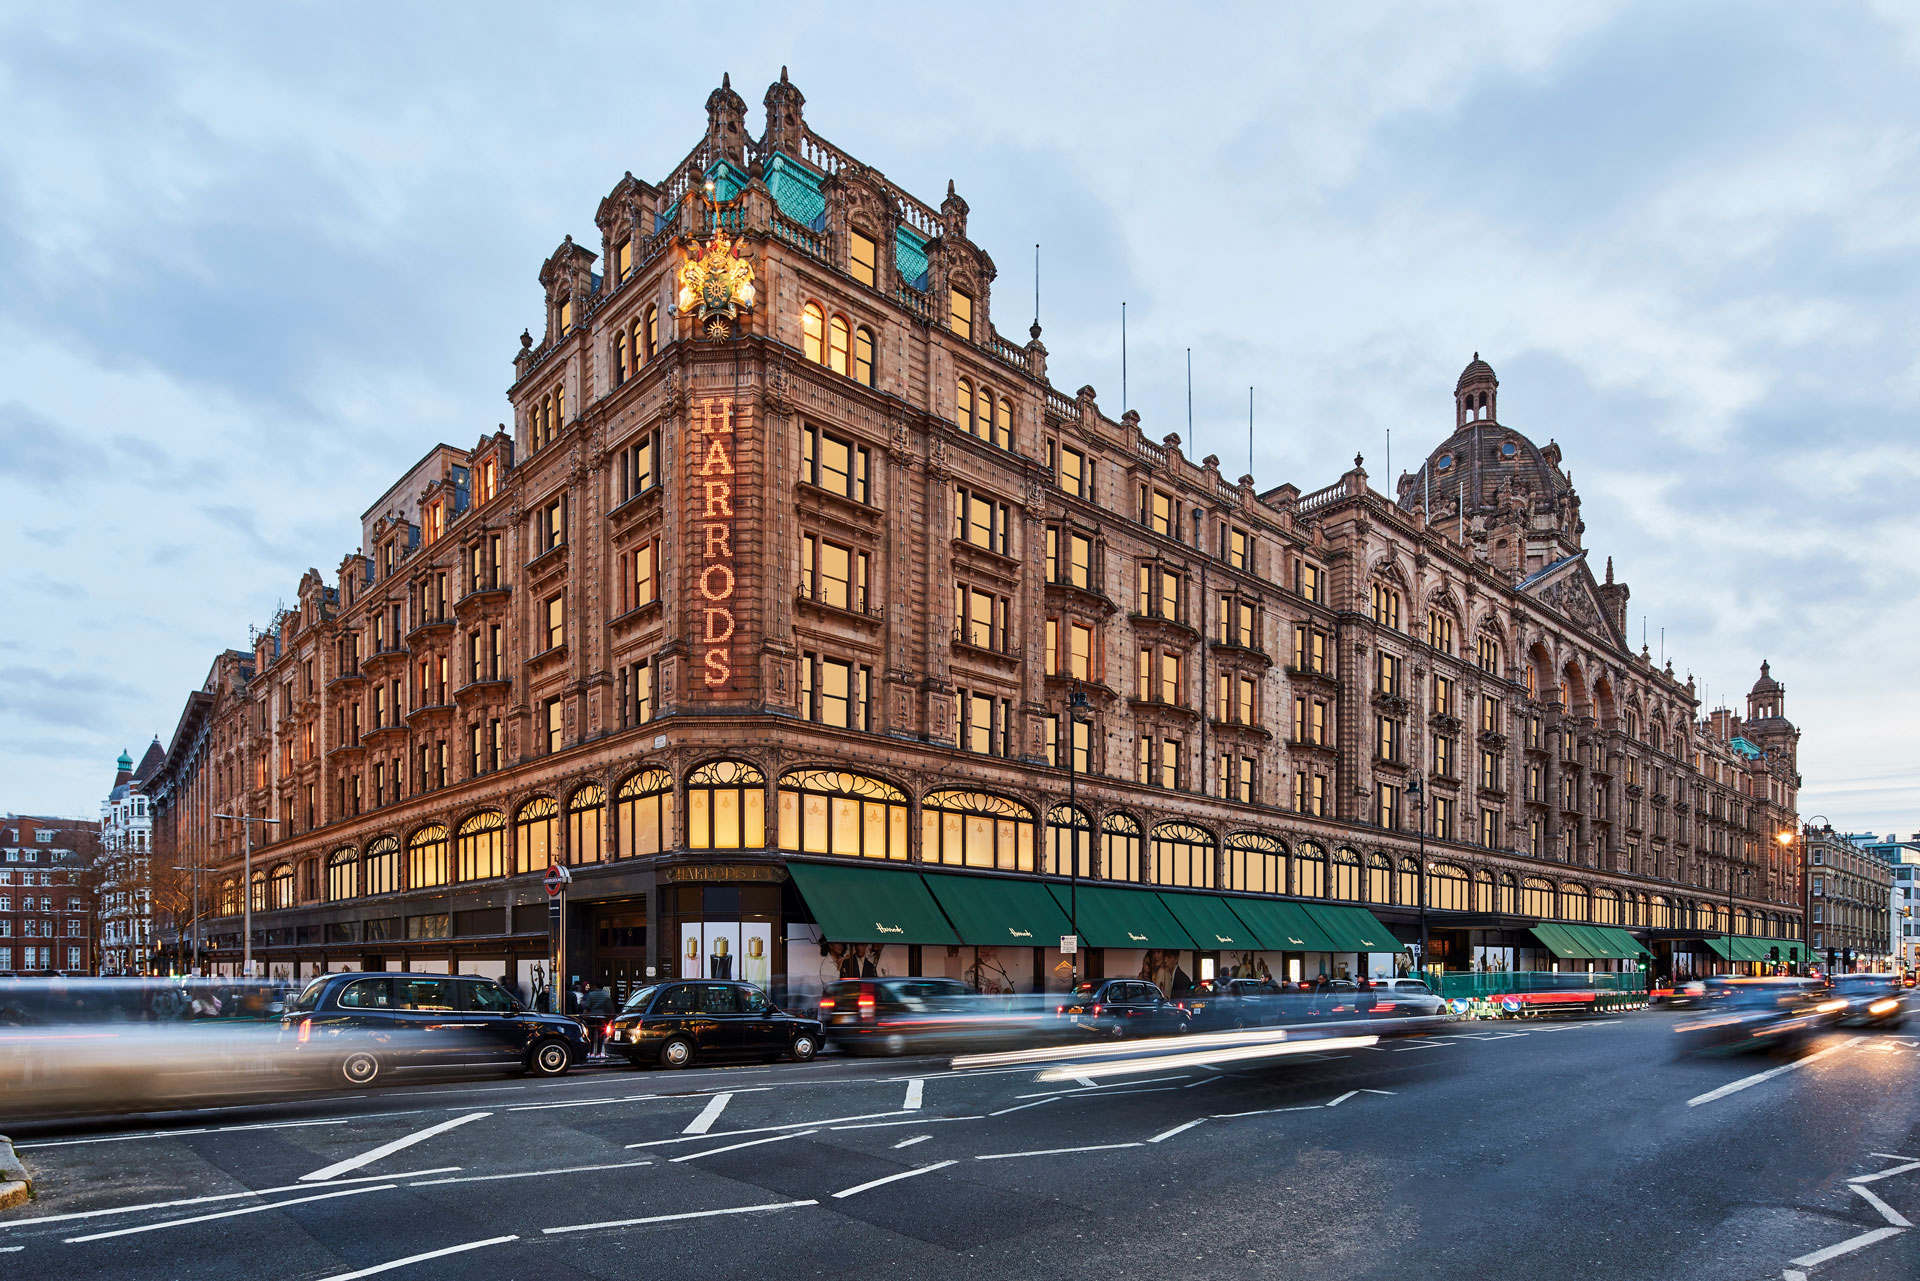 Harrods UK, The World's Leading Luxury Department Store